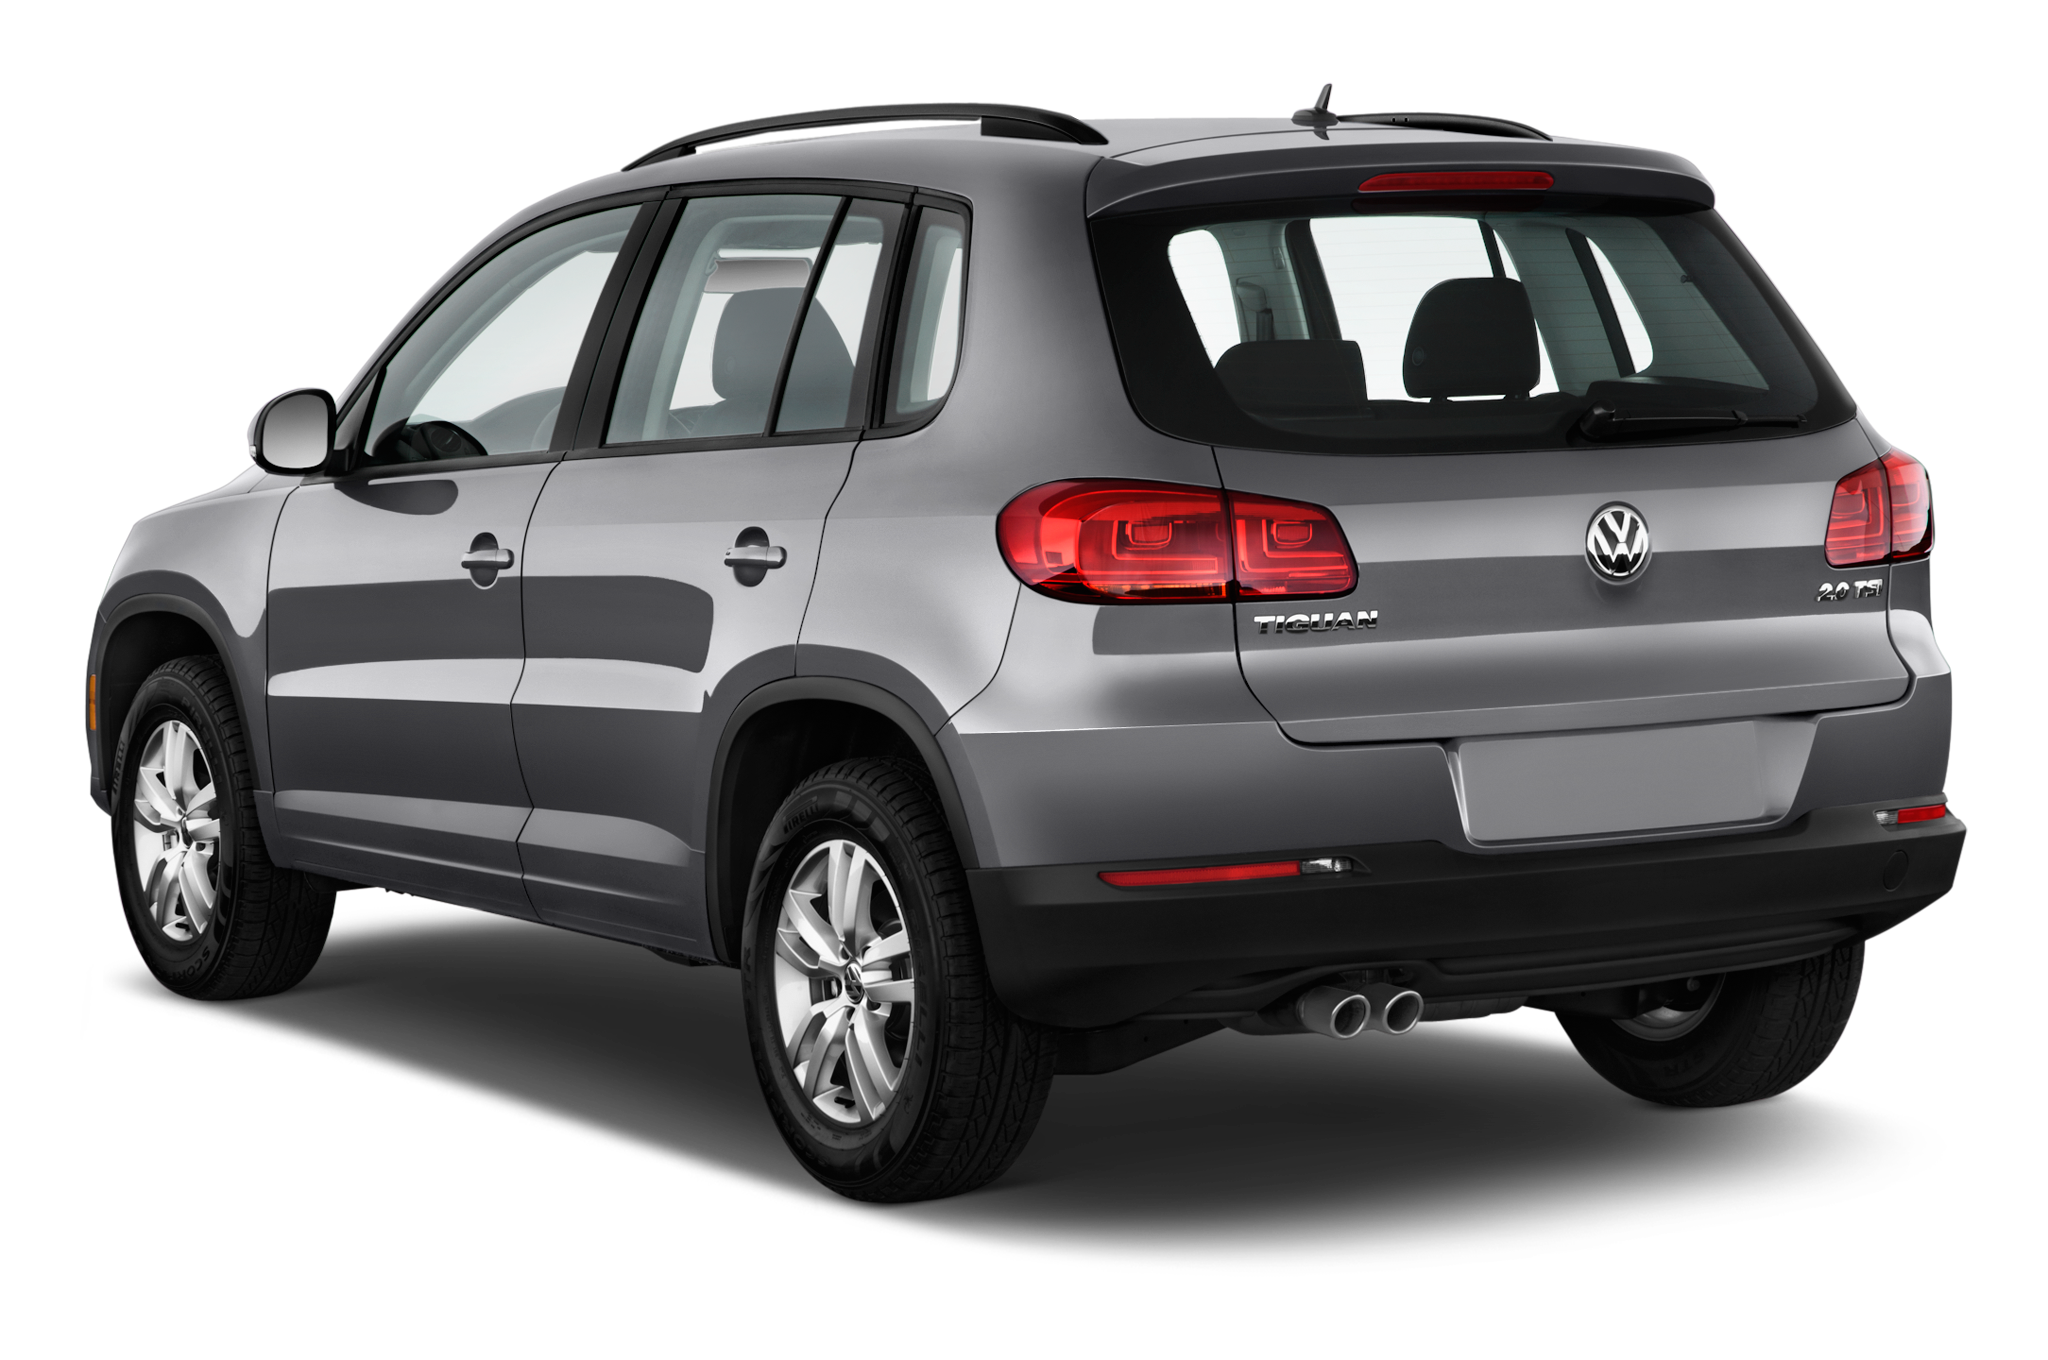 Volkswagen Tiguan Backgrounds, Compatible - PC, Mobile, Gadgets| 2048x1360 px